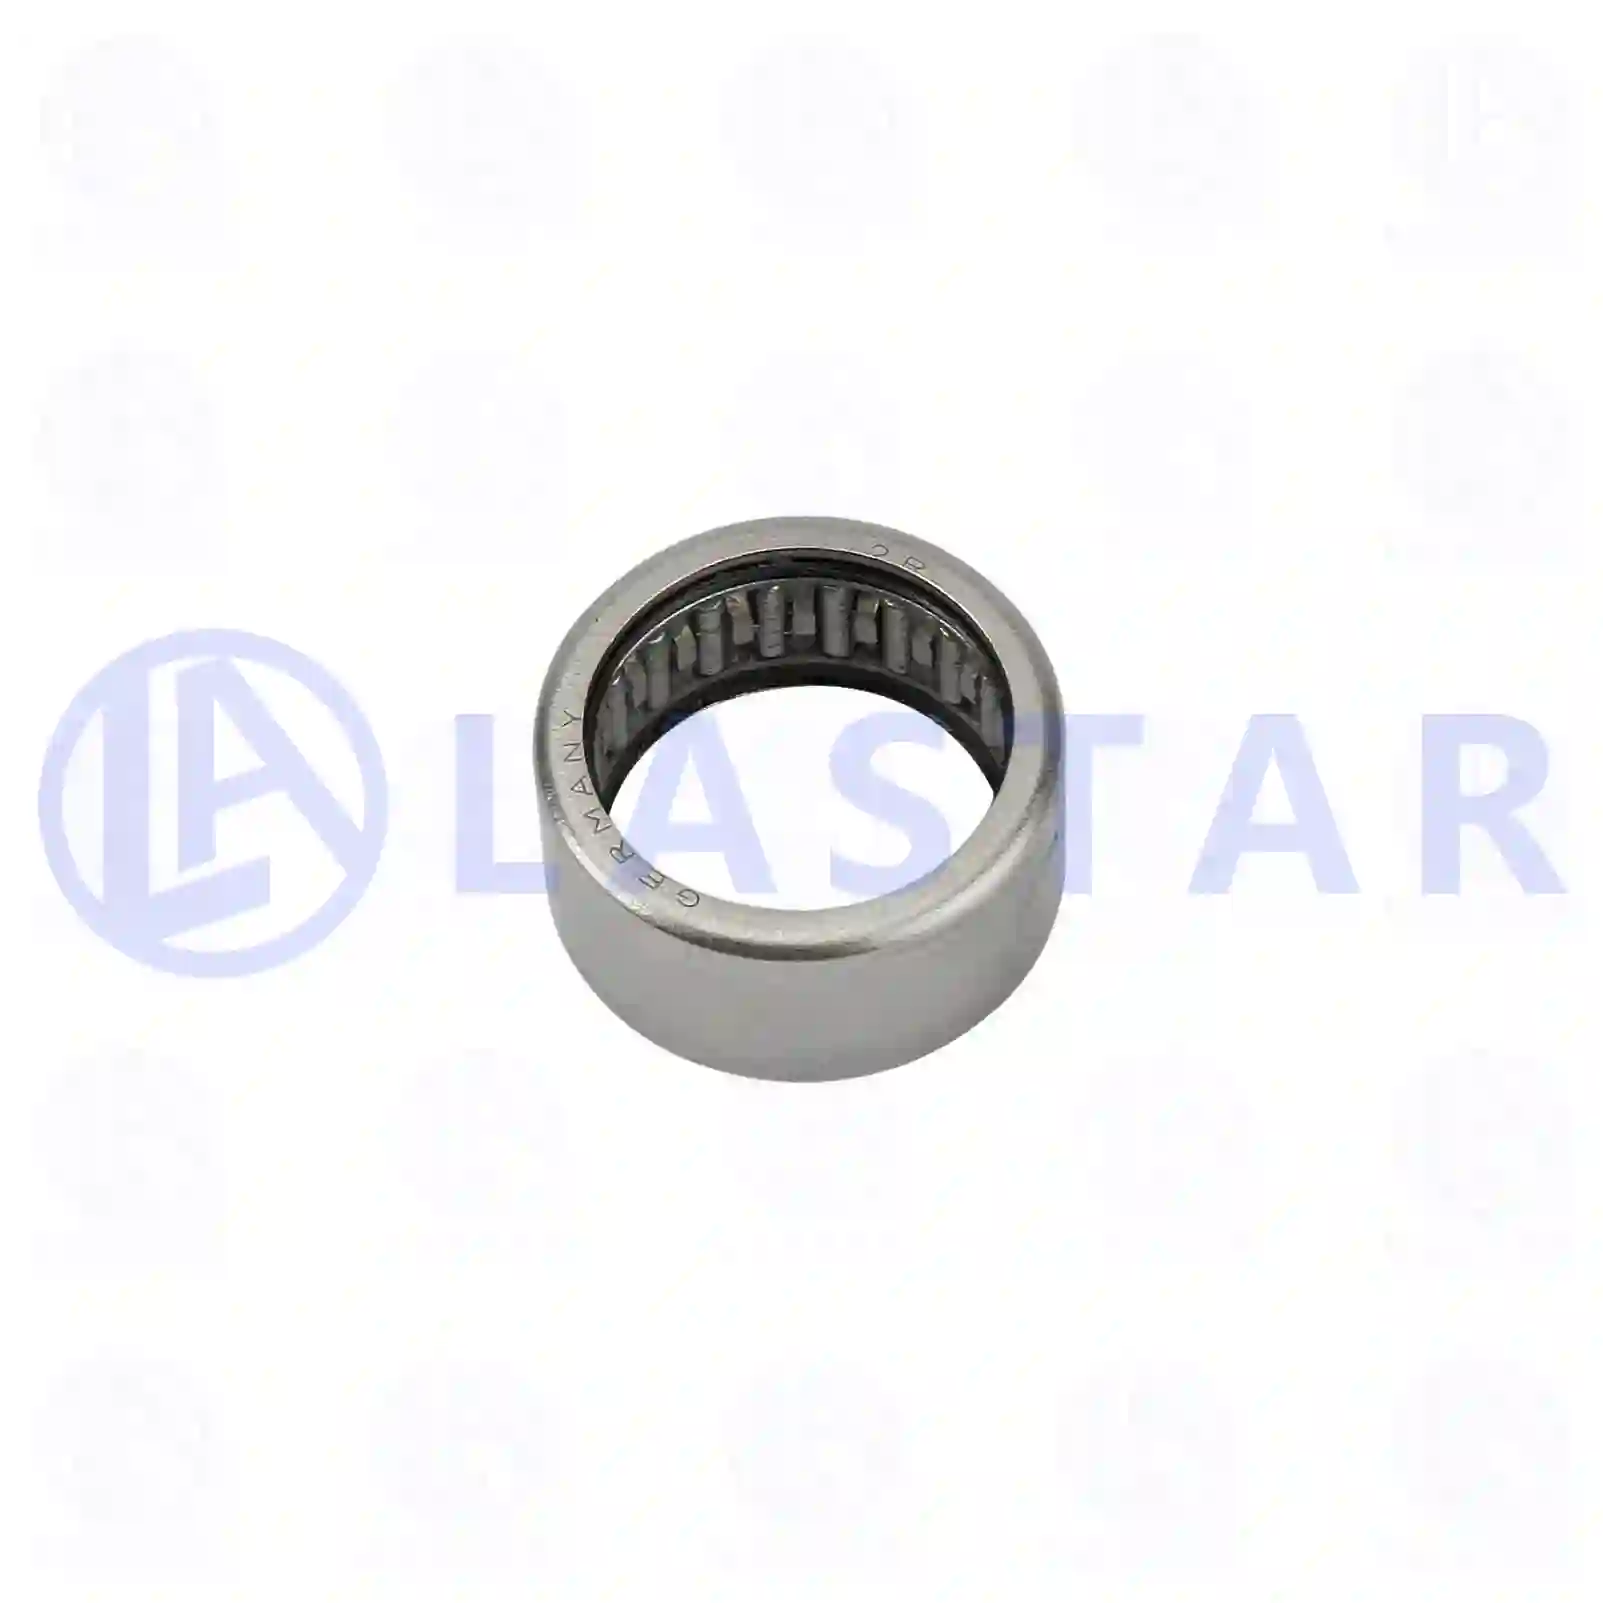 Bearings Needle bearing, la no: 77724835 ,  oem no:368956, , Lastar Spare Part | Truck Spare Parts, Auotomotive Spare Parts